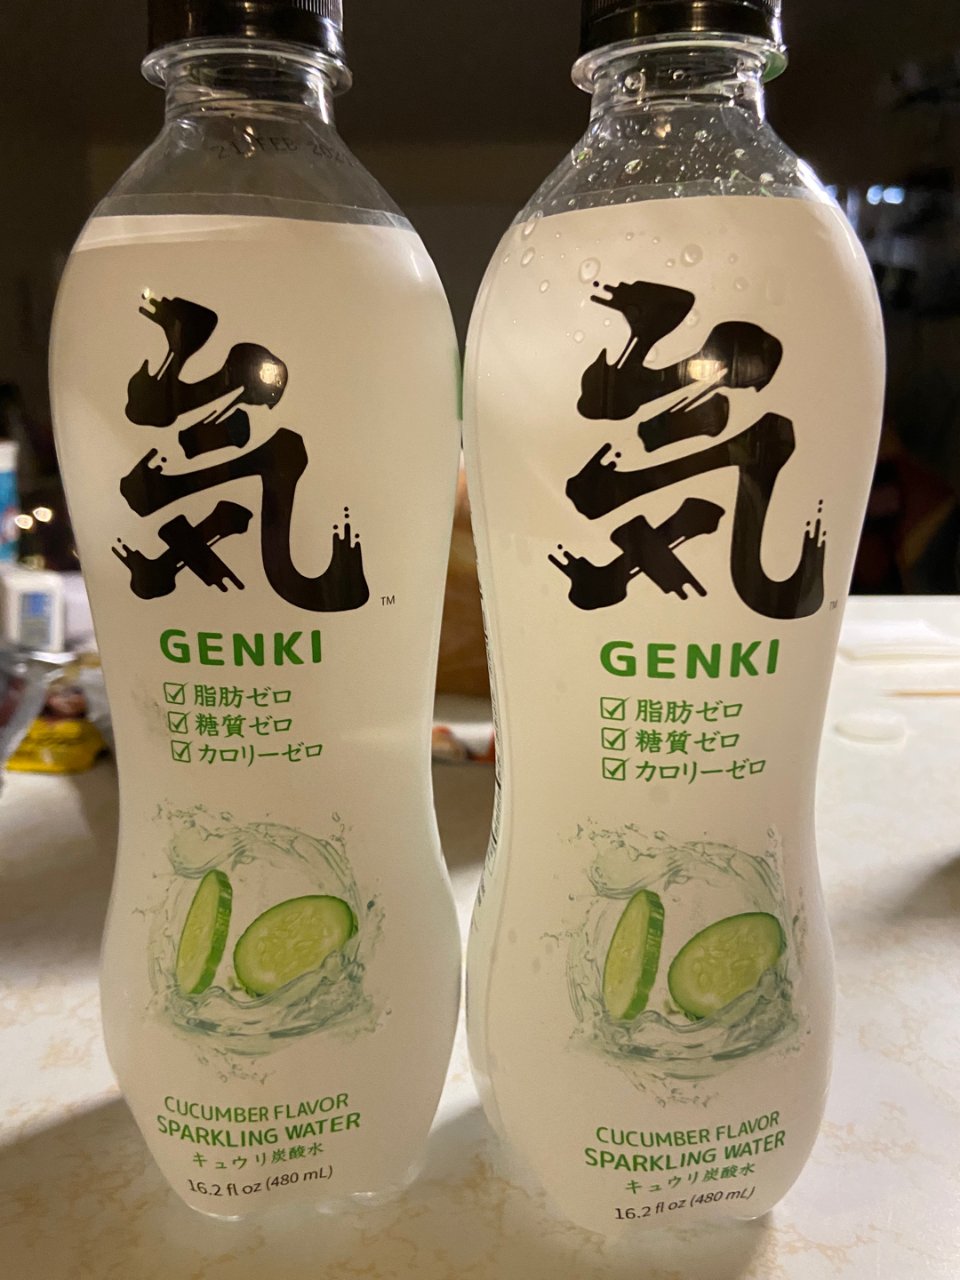 Genki元气碳酸饮料...